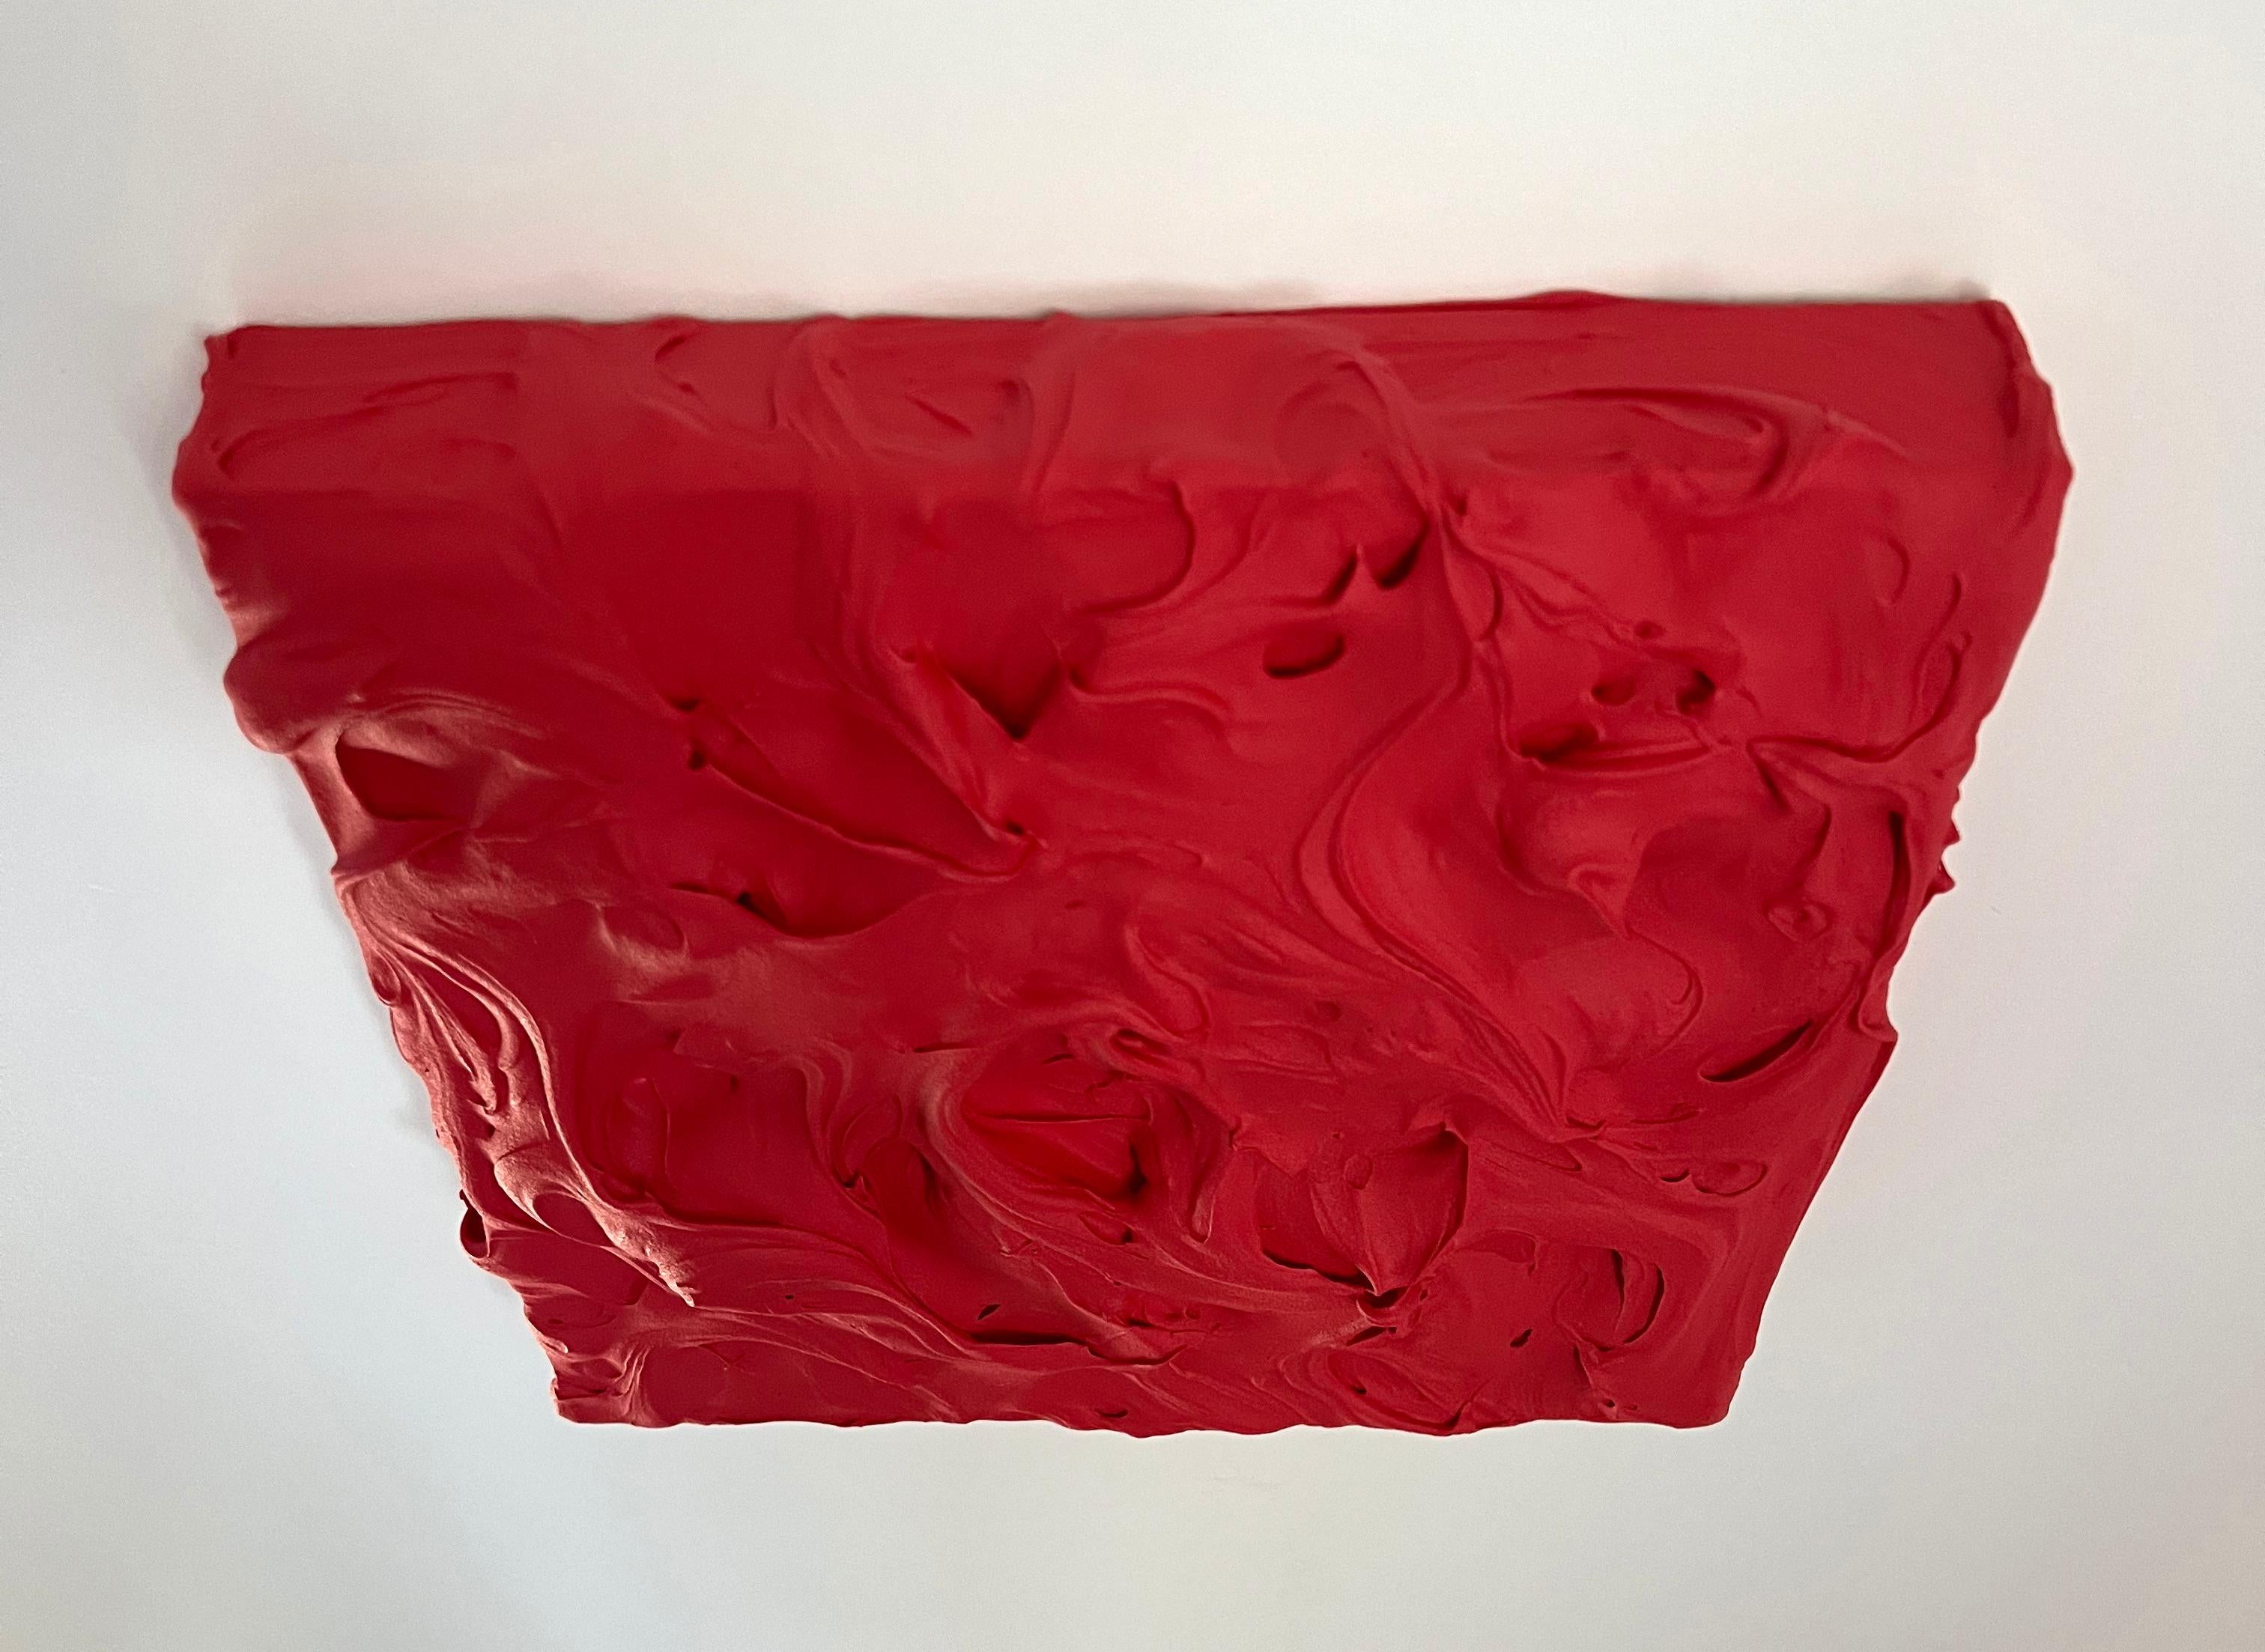 Roter Excess (thick impasto painting monochrome Pop-Art quadratisches Design) – Painting von Chloe Hedden